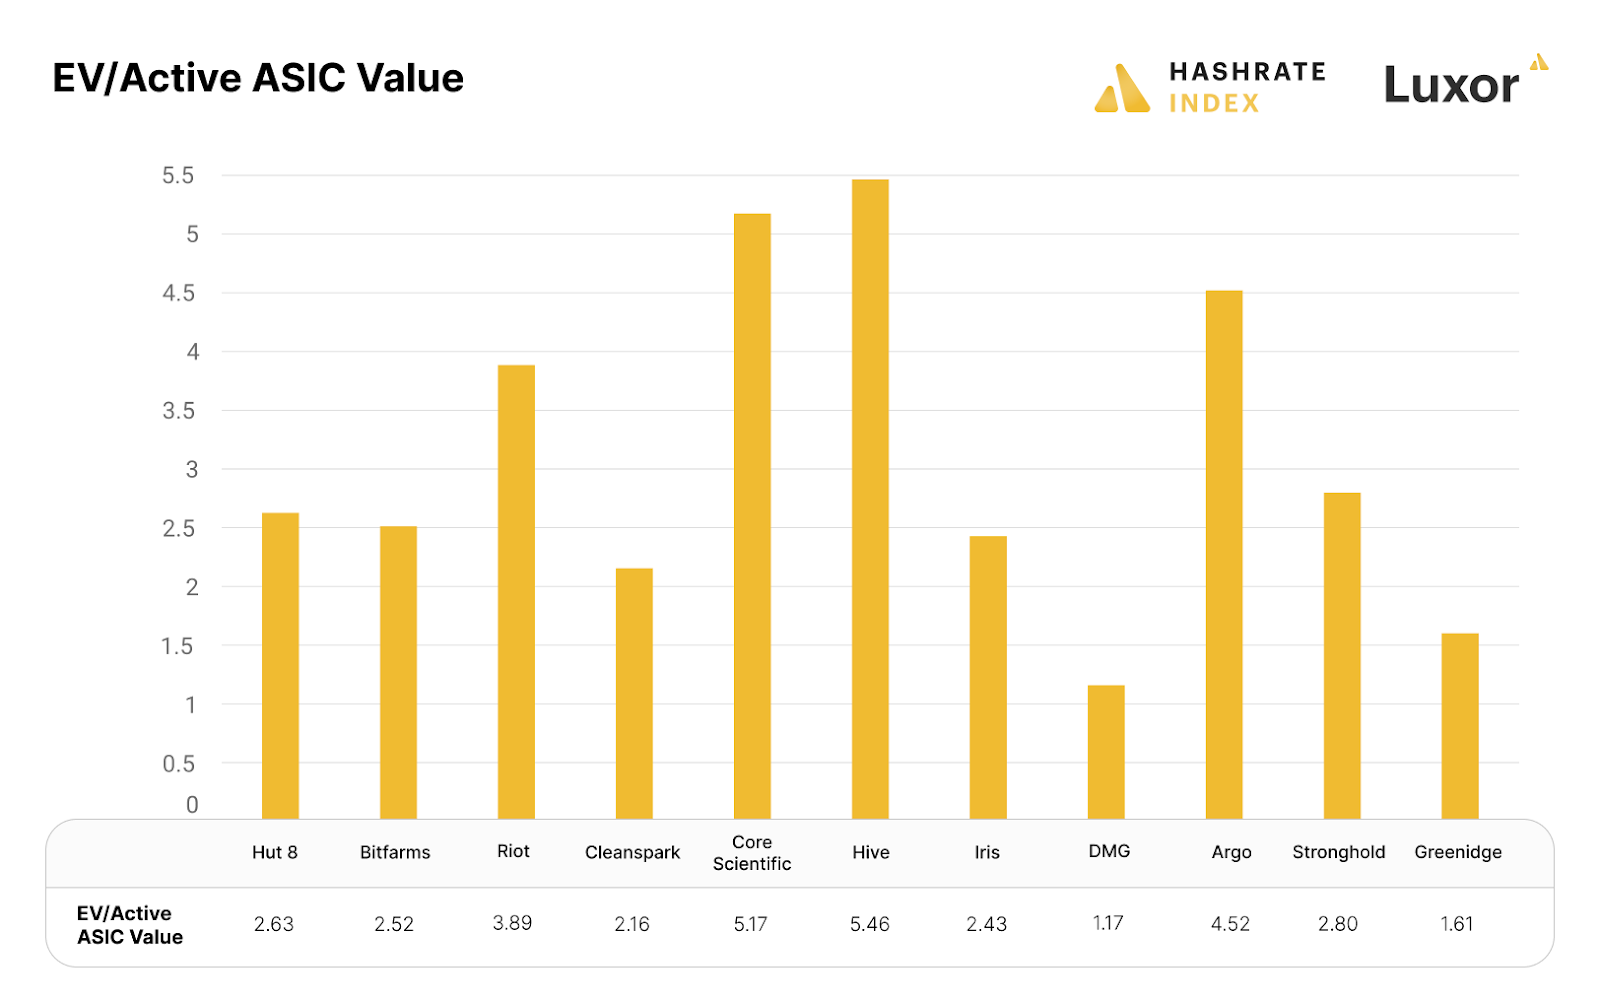 EV / Active ASIC Value ratio for public bitcoin miners | source: public miner disclosures 